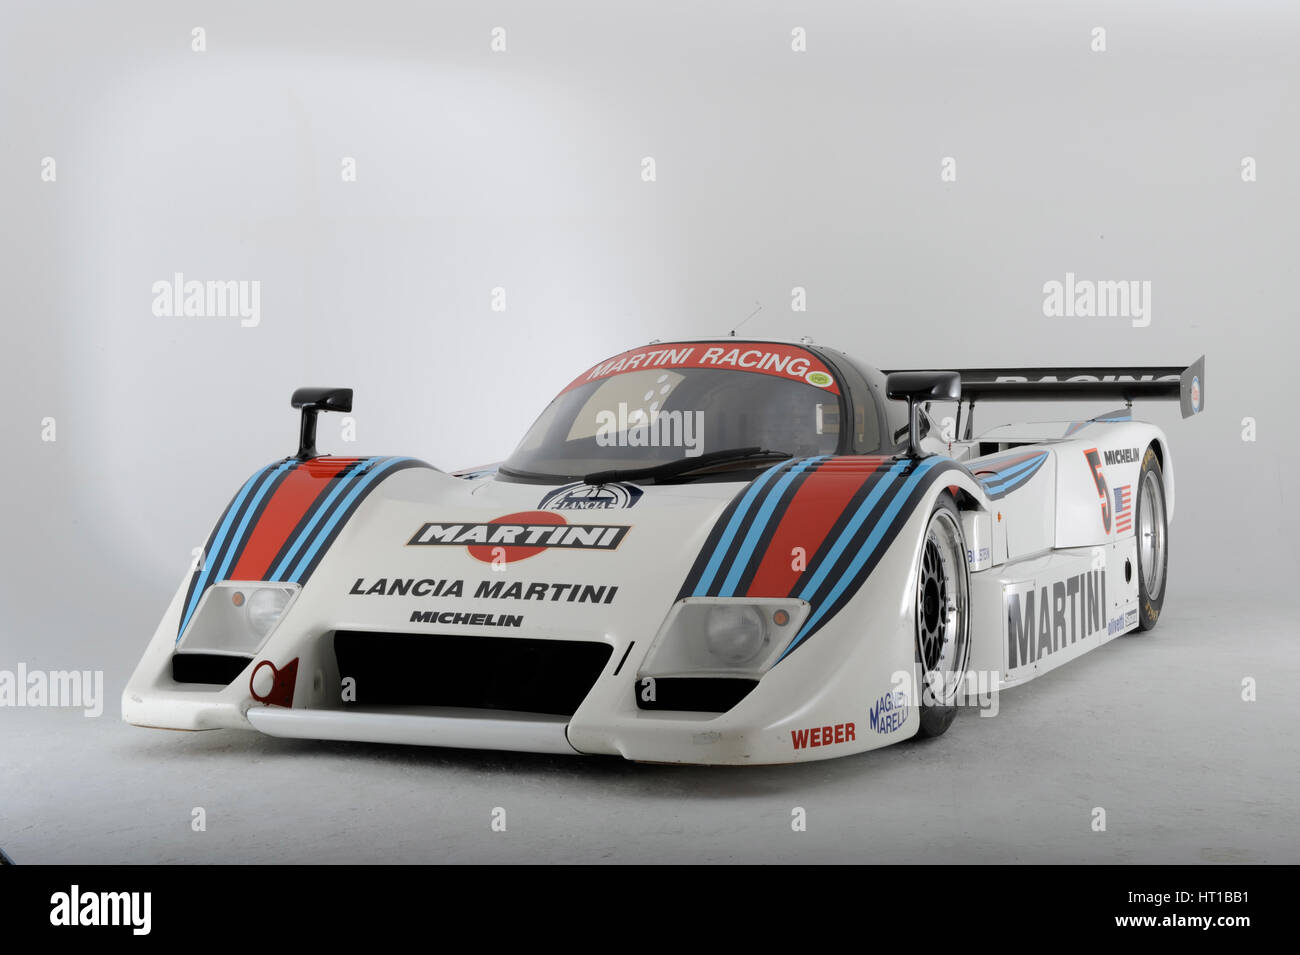 Lancia Martini Le Mans car chasis no 0007 1983. Artist: Simon Clay. Stock Photo